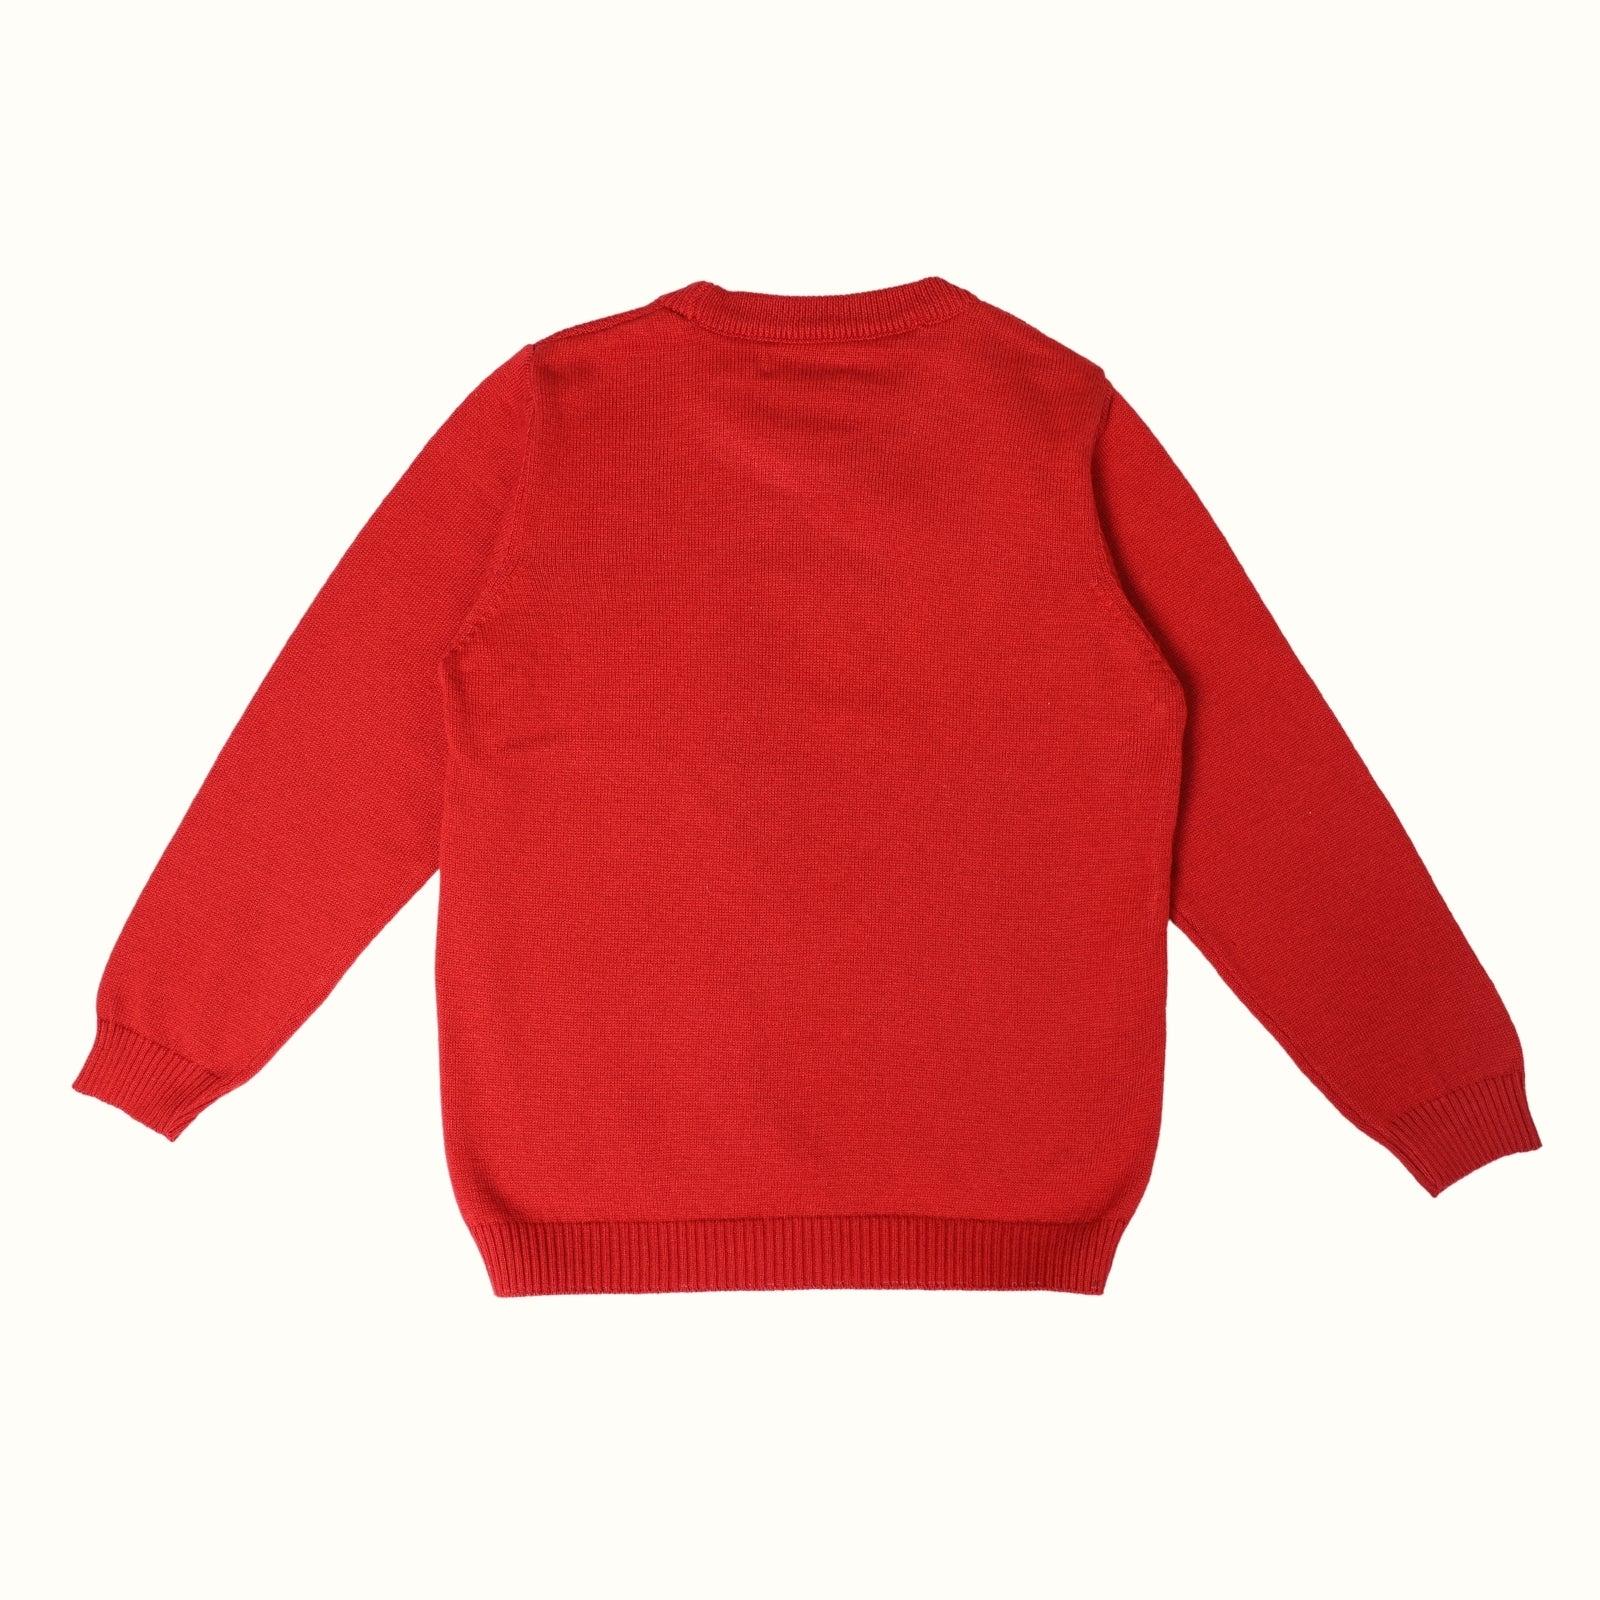 Greendeer Lighhearted 100% Cotton Reindeer Jacquard Sweater - Cherry Red